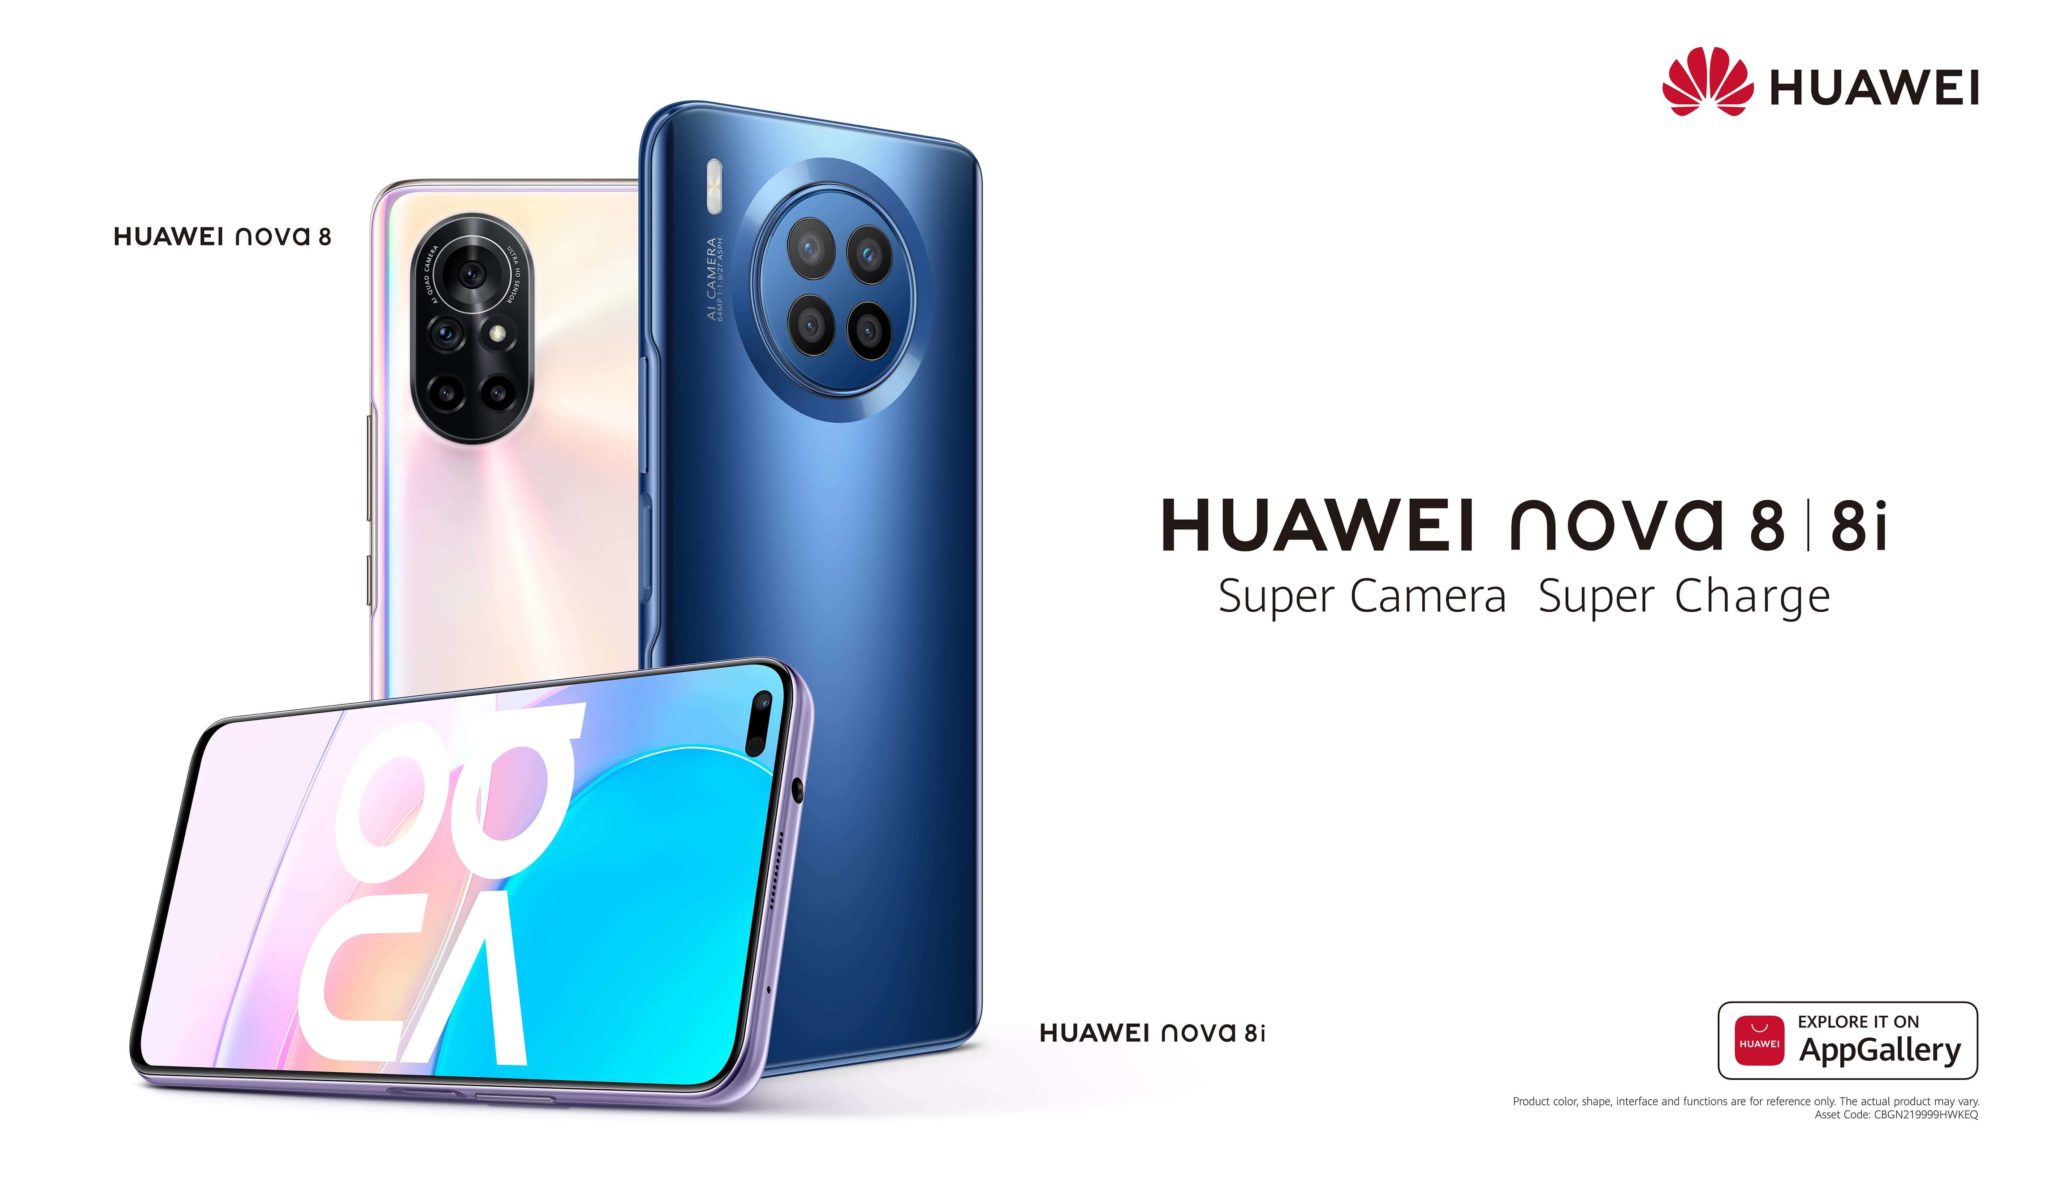 Huawei nova 8 and nova 8i